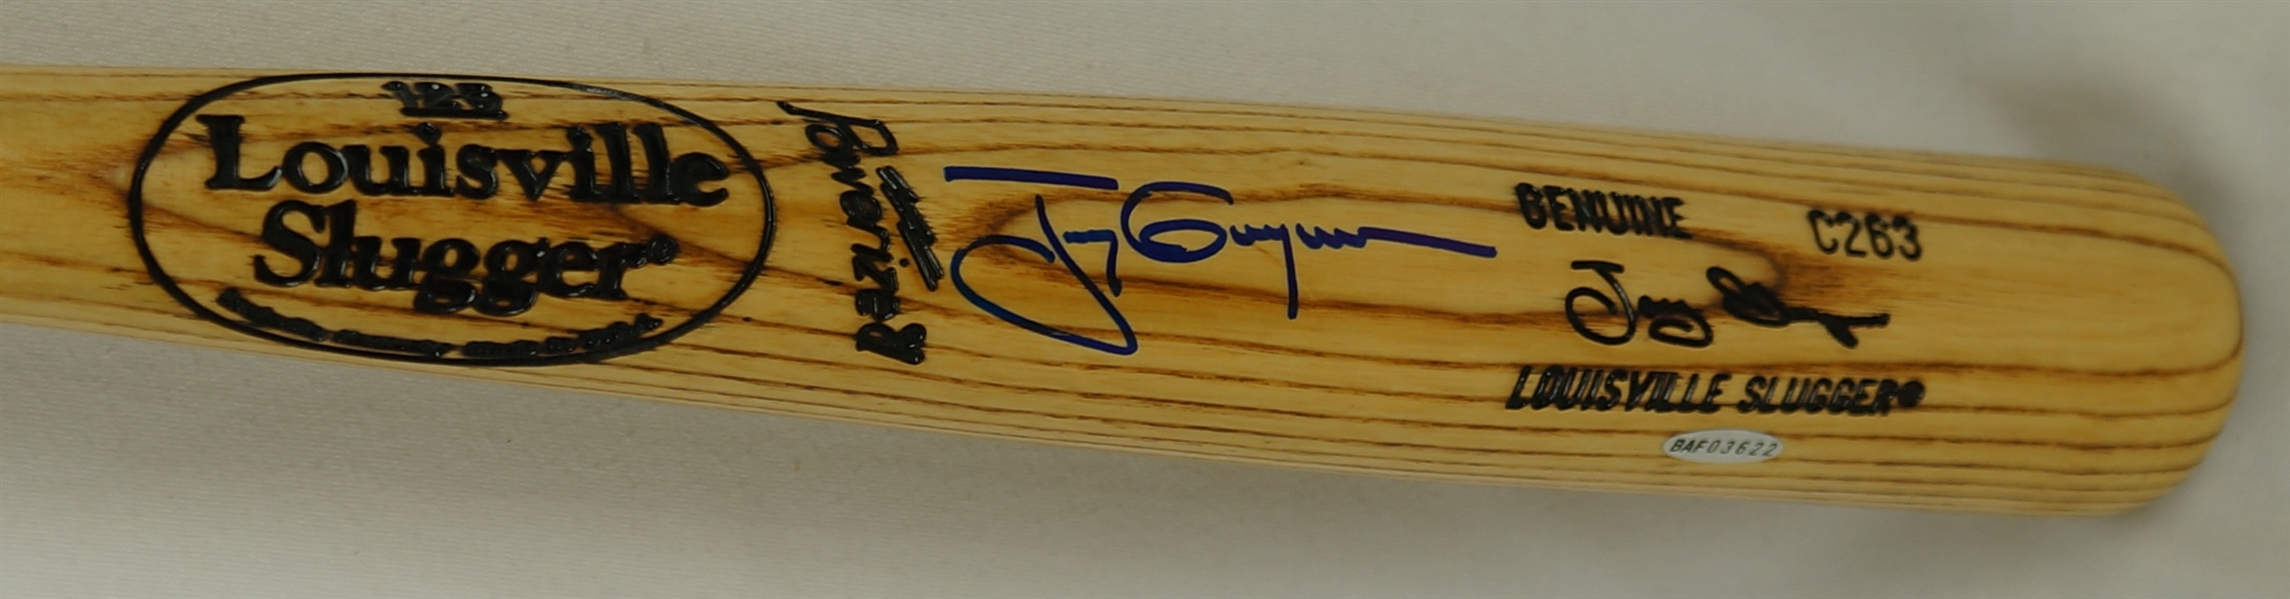 Tony Gwynn Autographed Louisville Slugger Signature Model Bat UDA